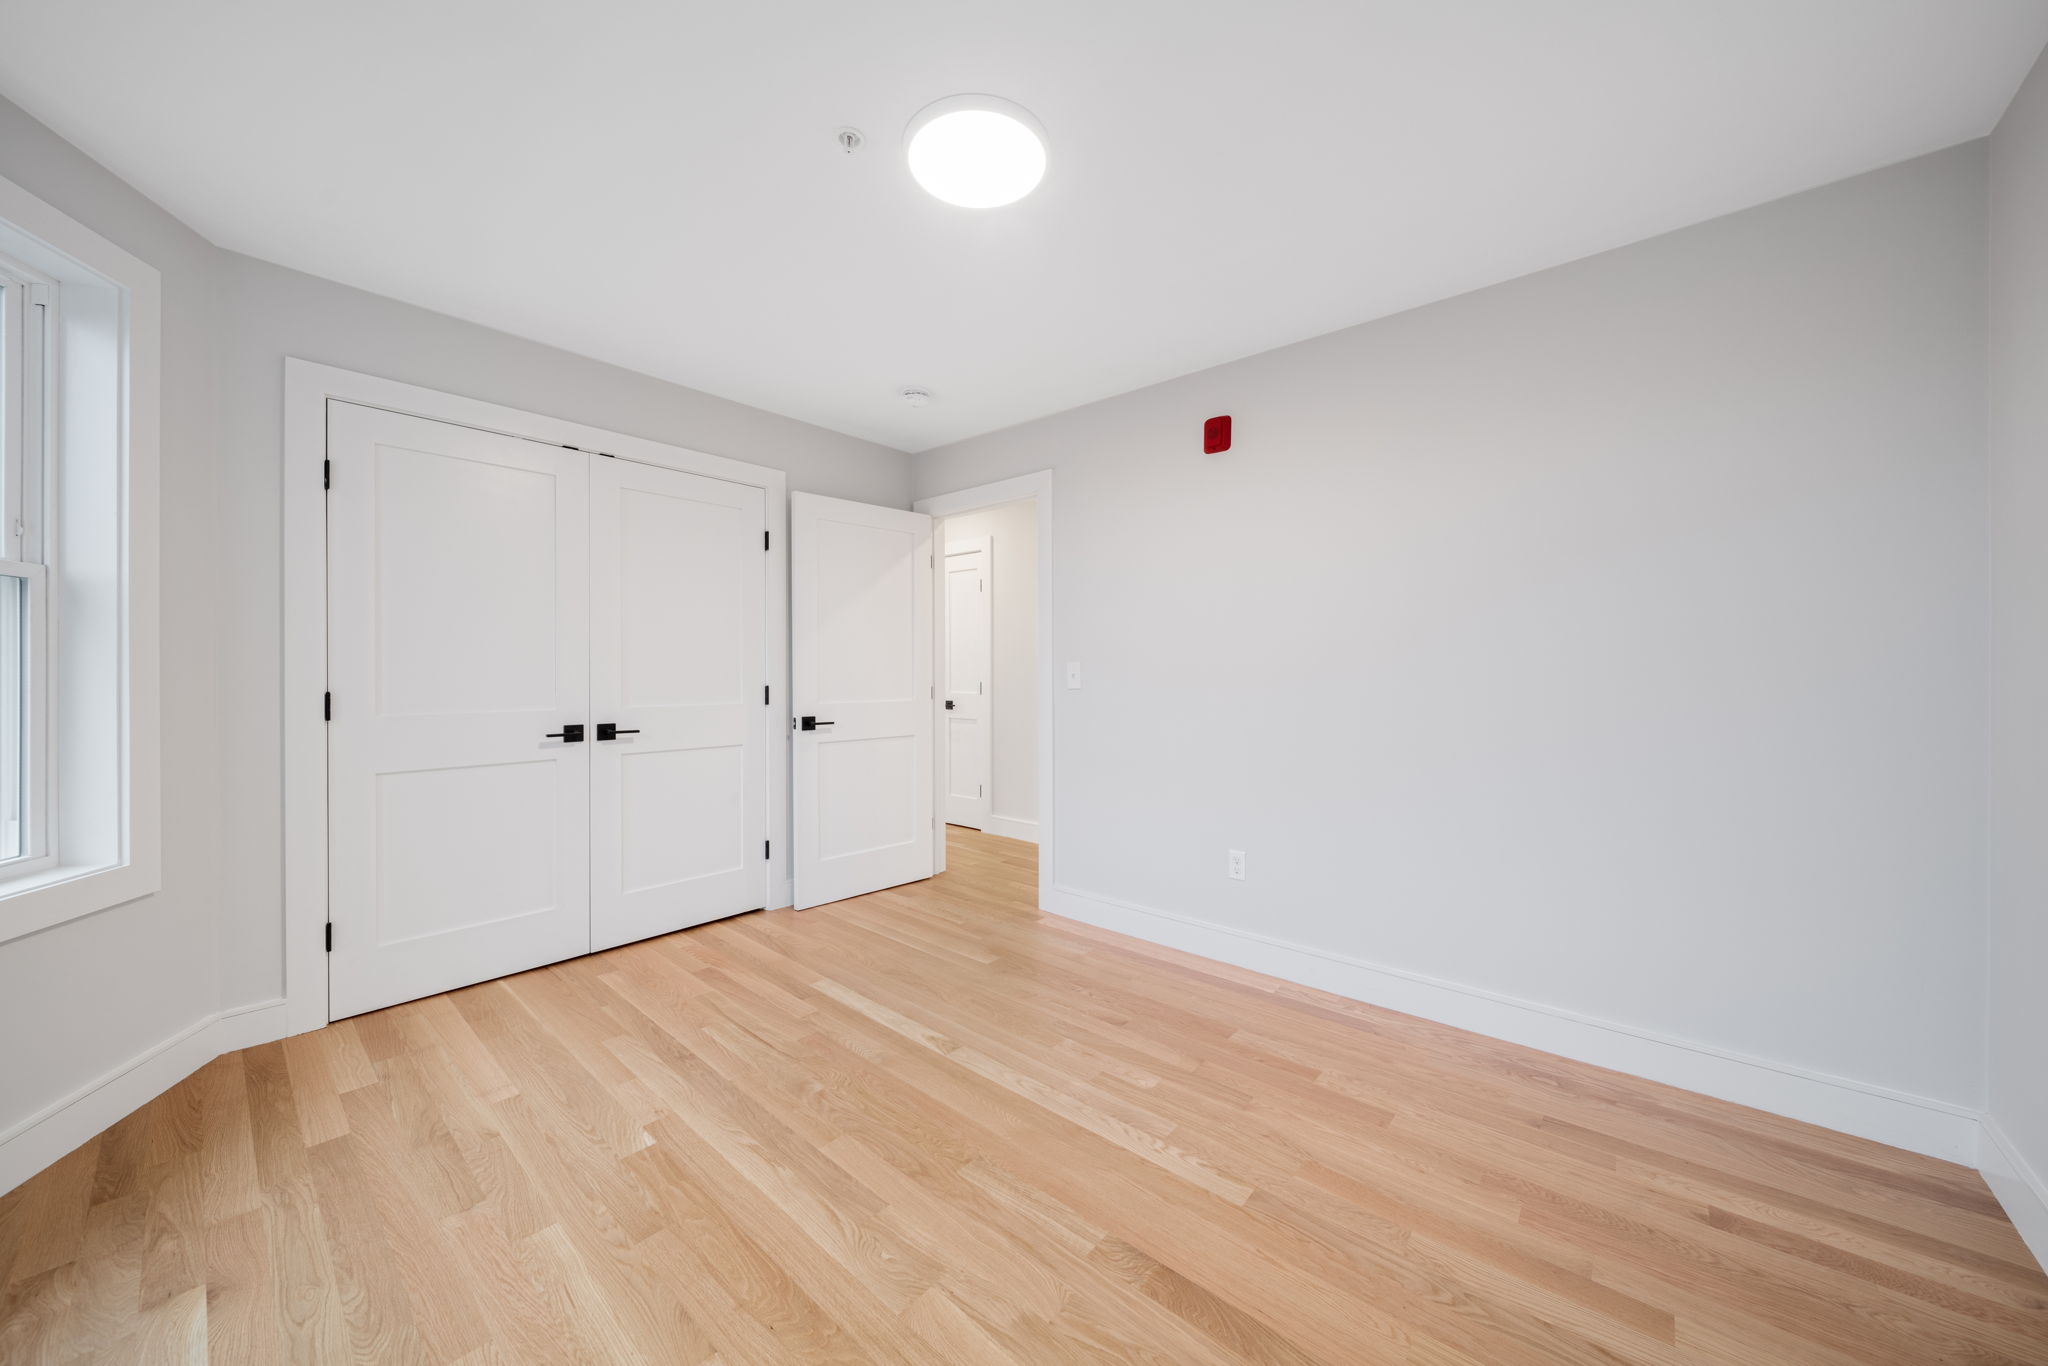 Photos of apartment on Wenham St.,Boston MA 02130